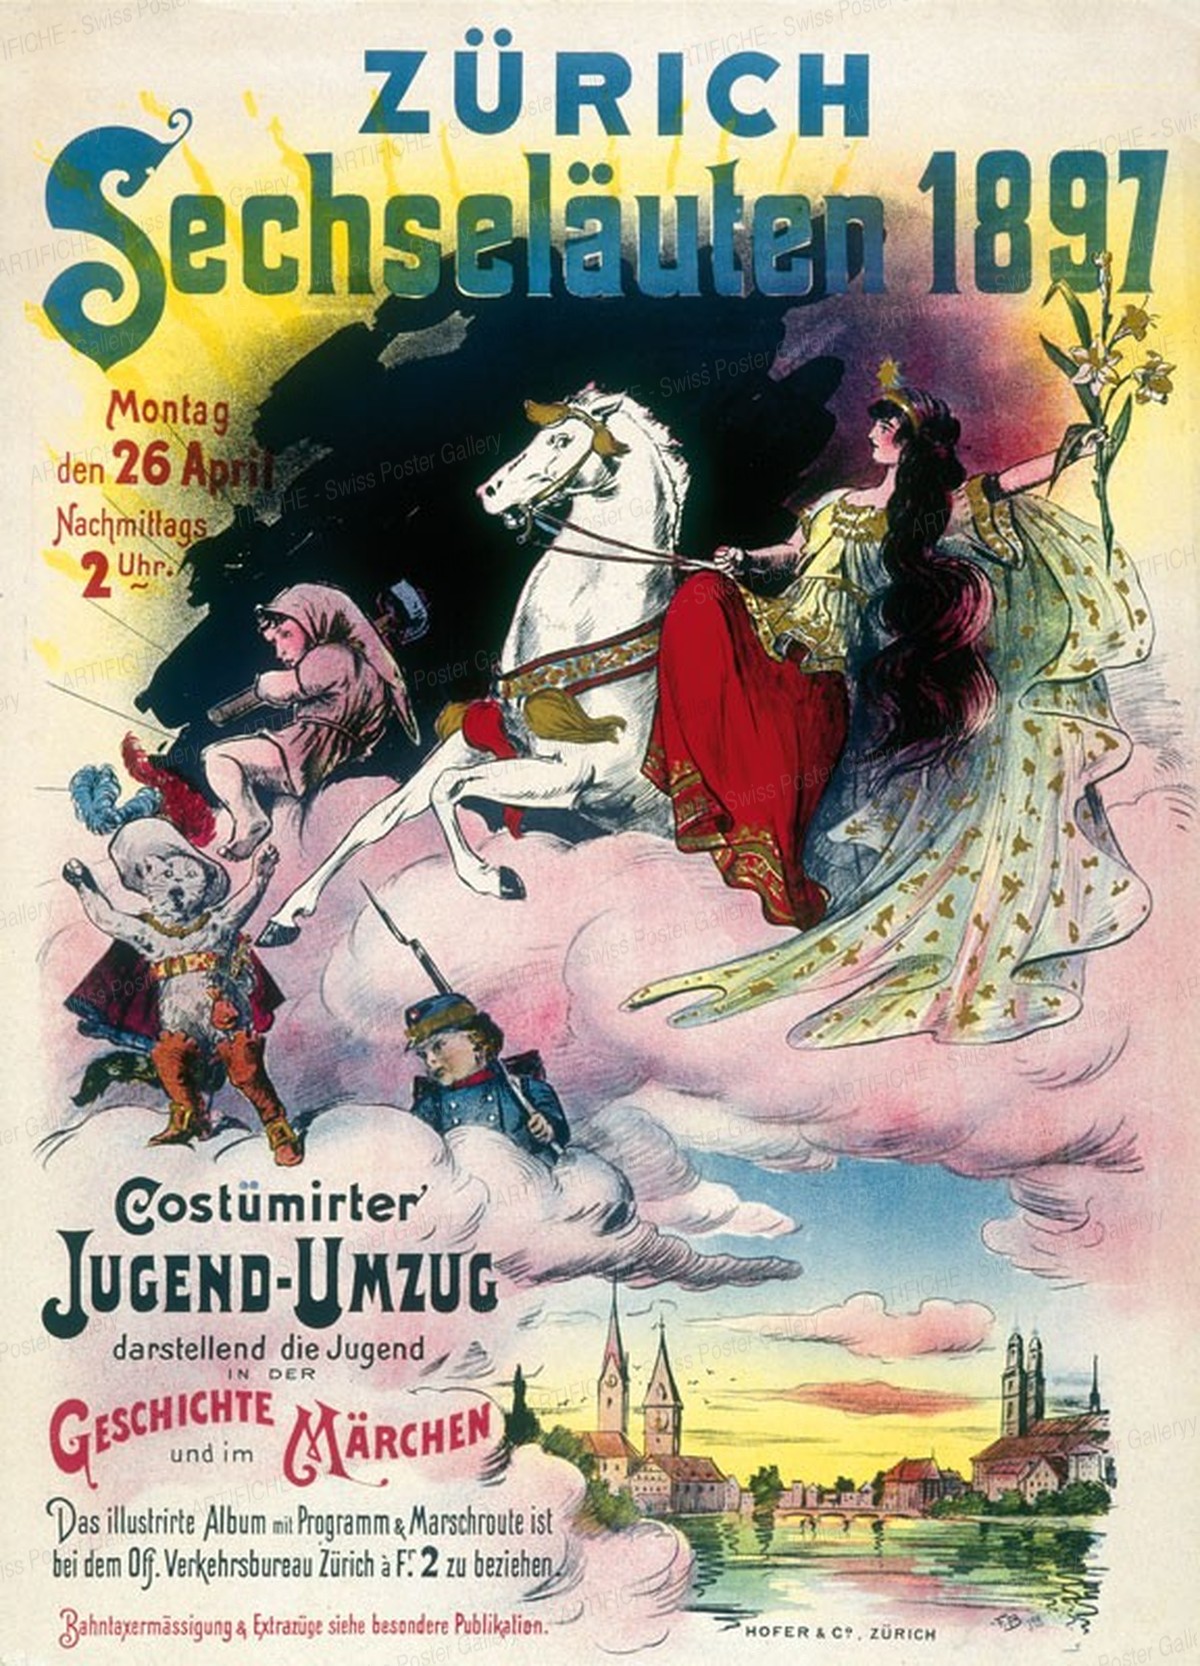 Zurich Guild Parade 1897, Fritz jun. Boscovits